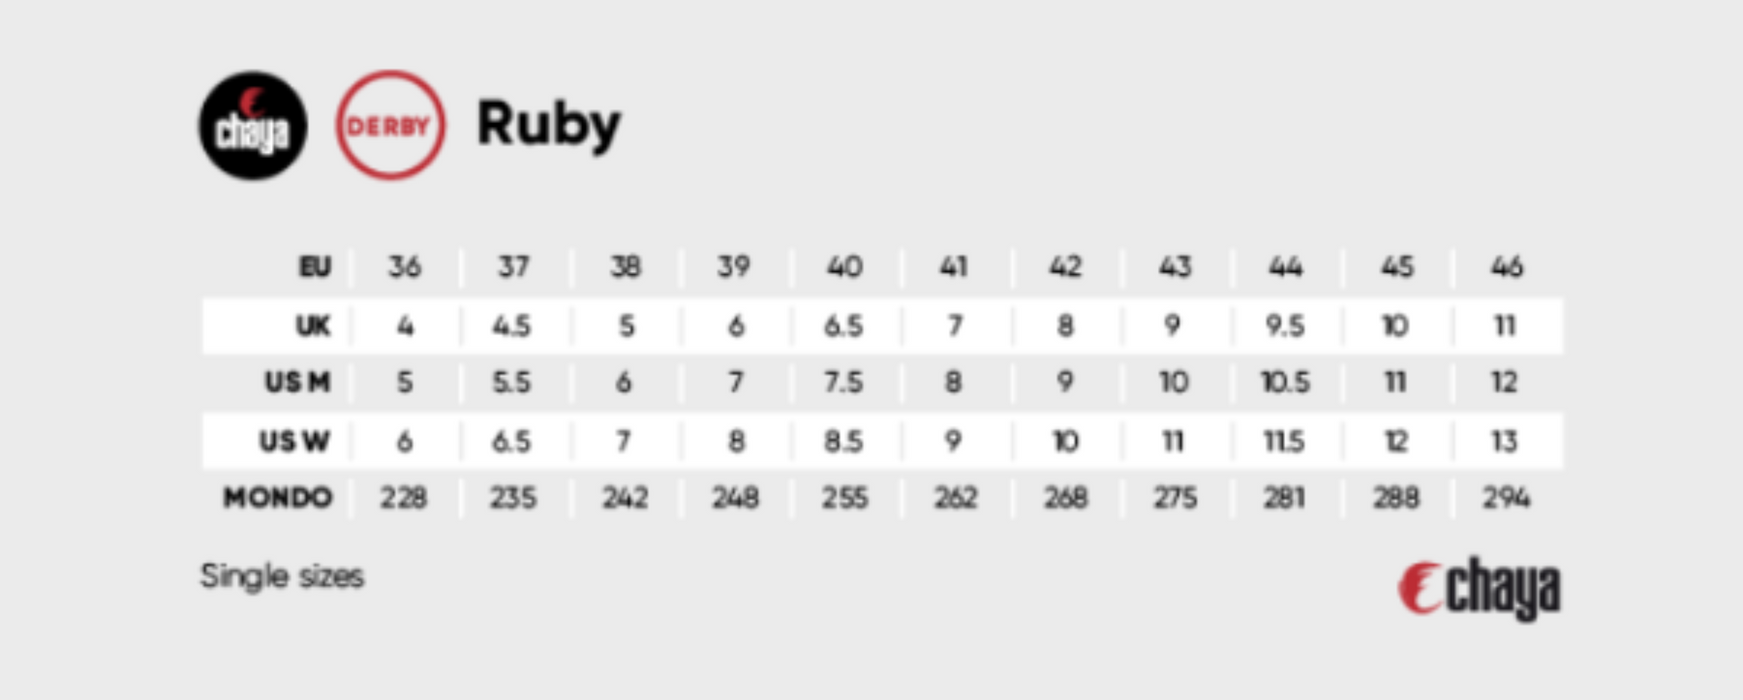 Ruby 2.0 Skate Size Chart